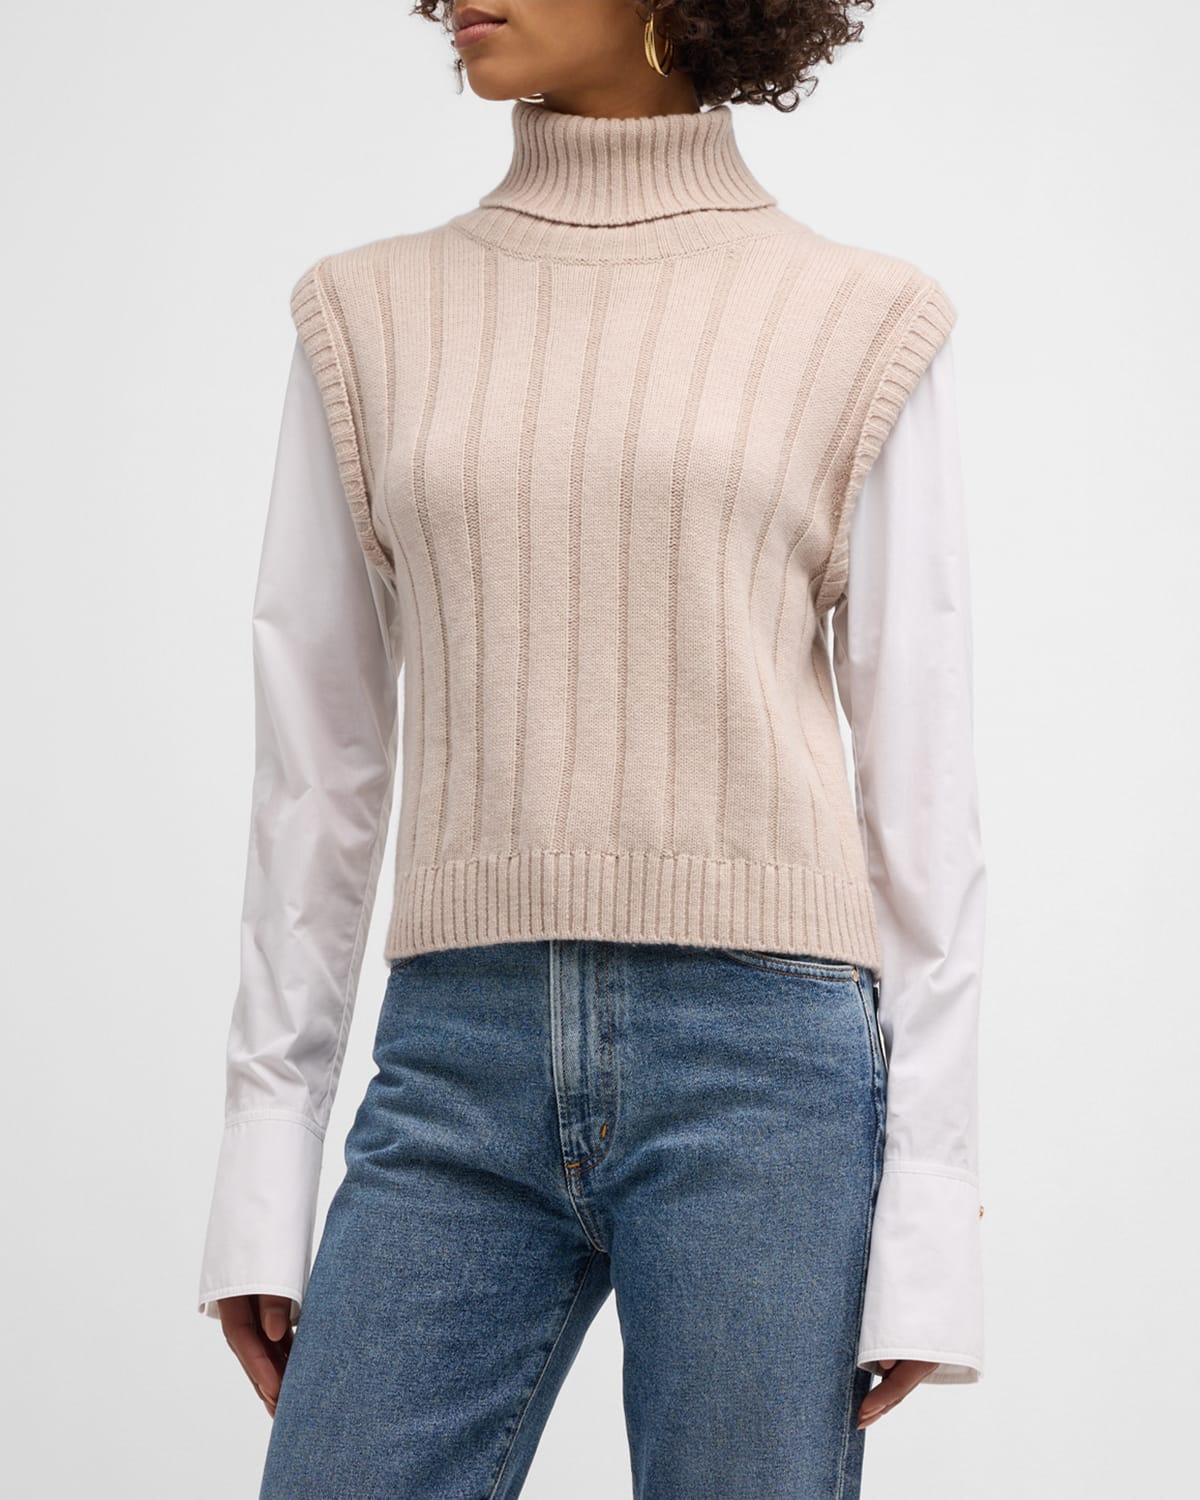 Paola Mixed-Media Turtleneck Sweater